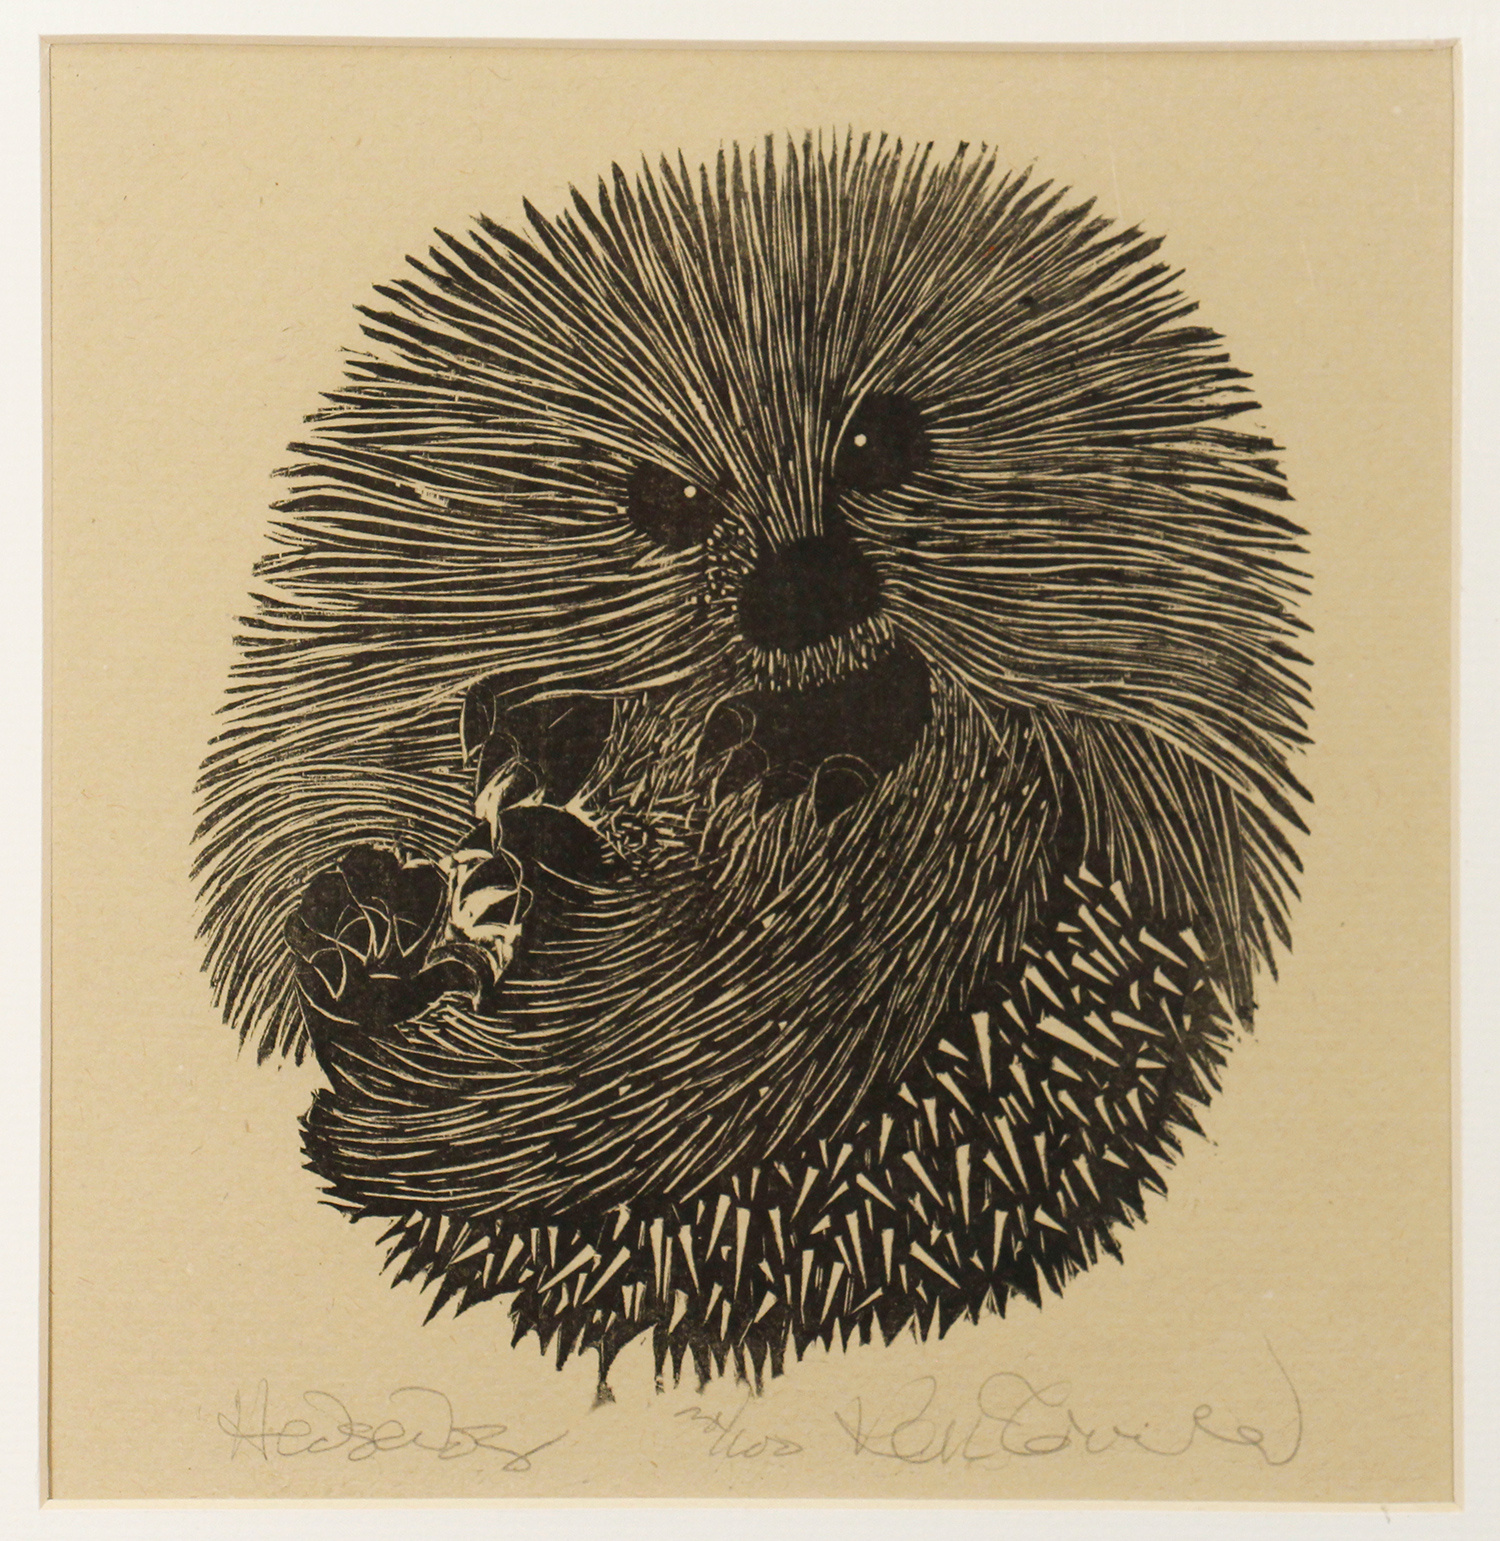 Hedgehog by Ken Townsend